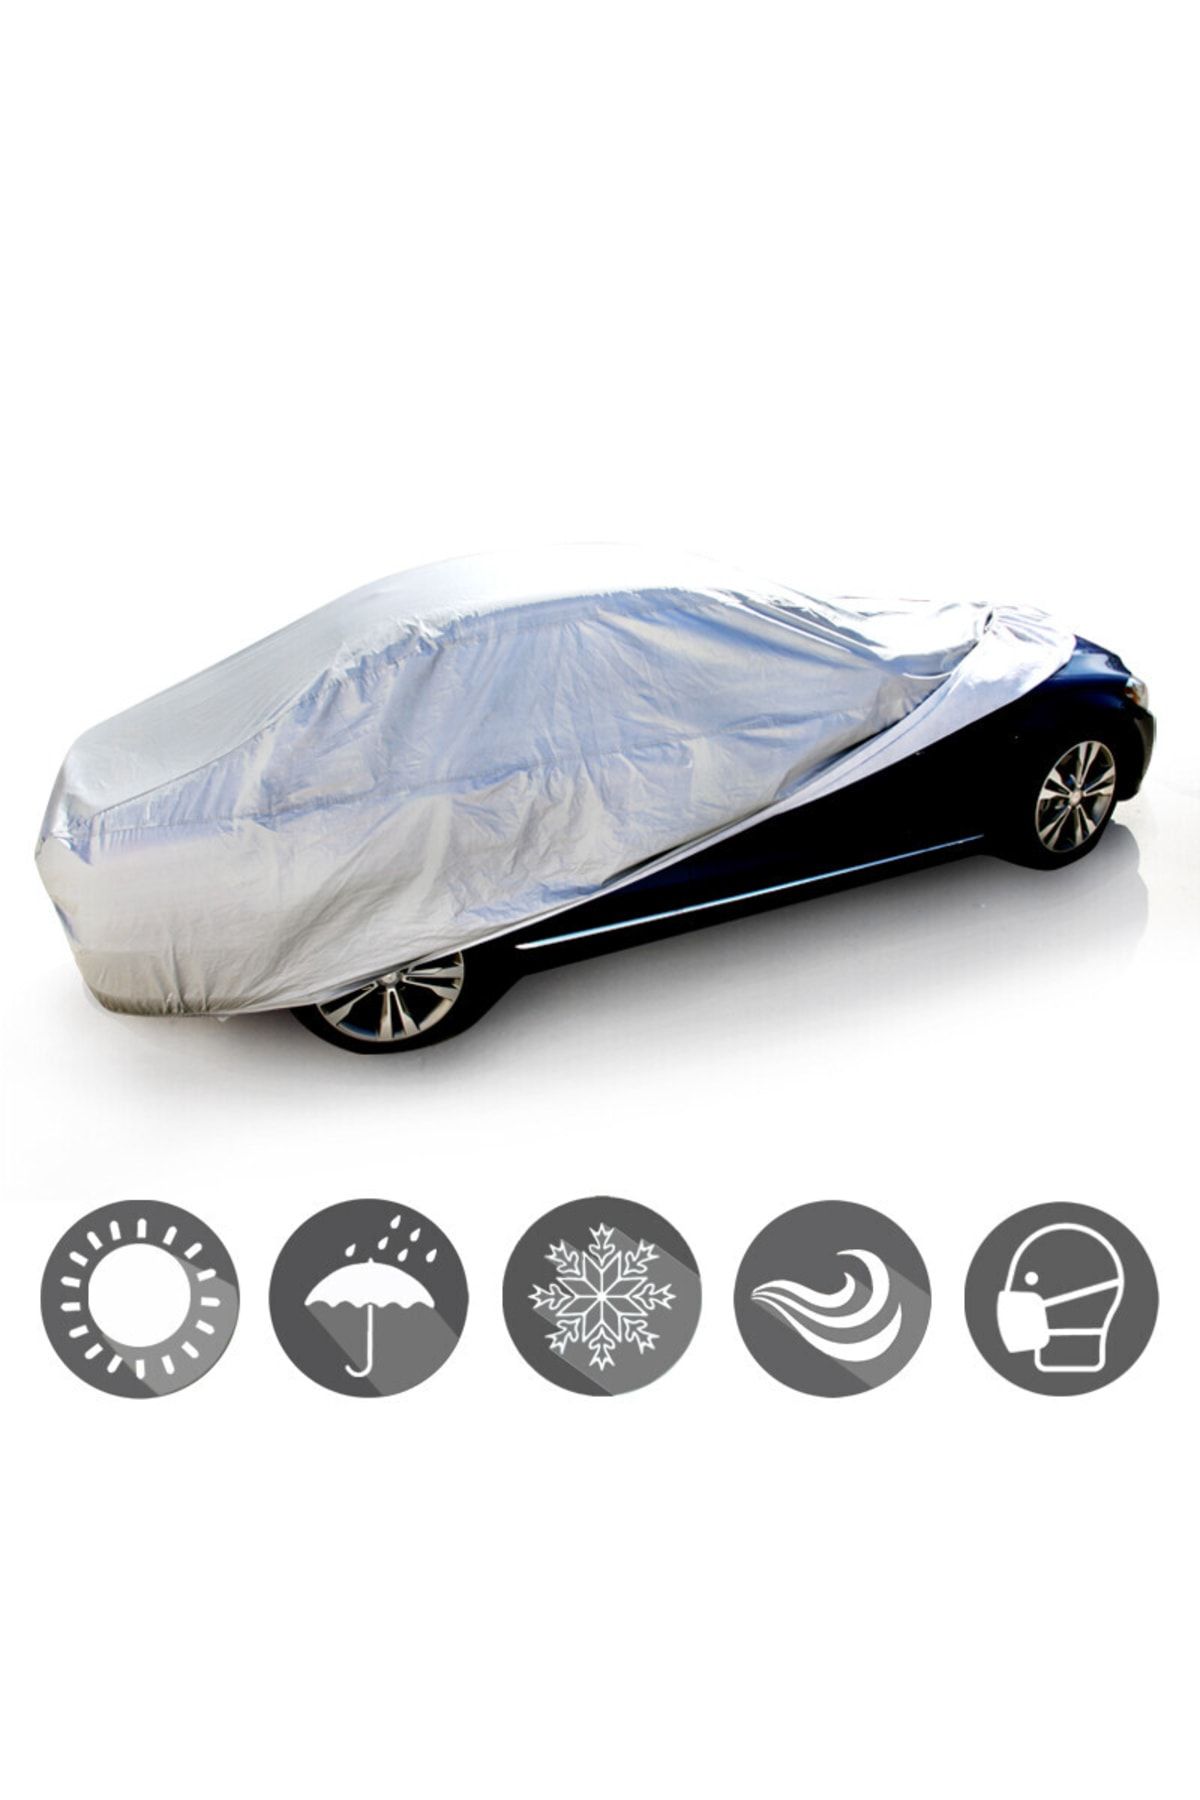 AutoEN Fiat Punto Evo 2014 Model Premium Quality Car Cover, Car